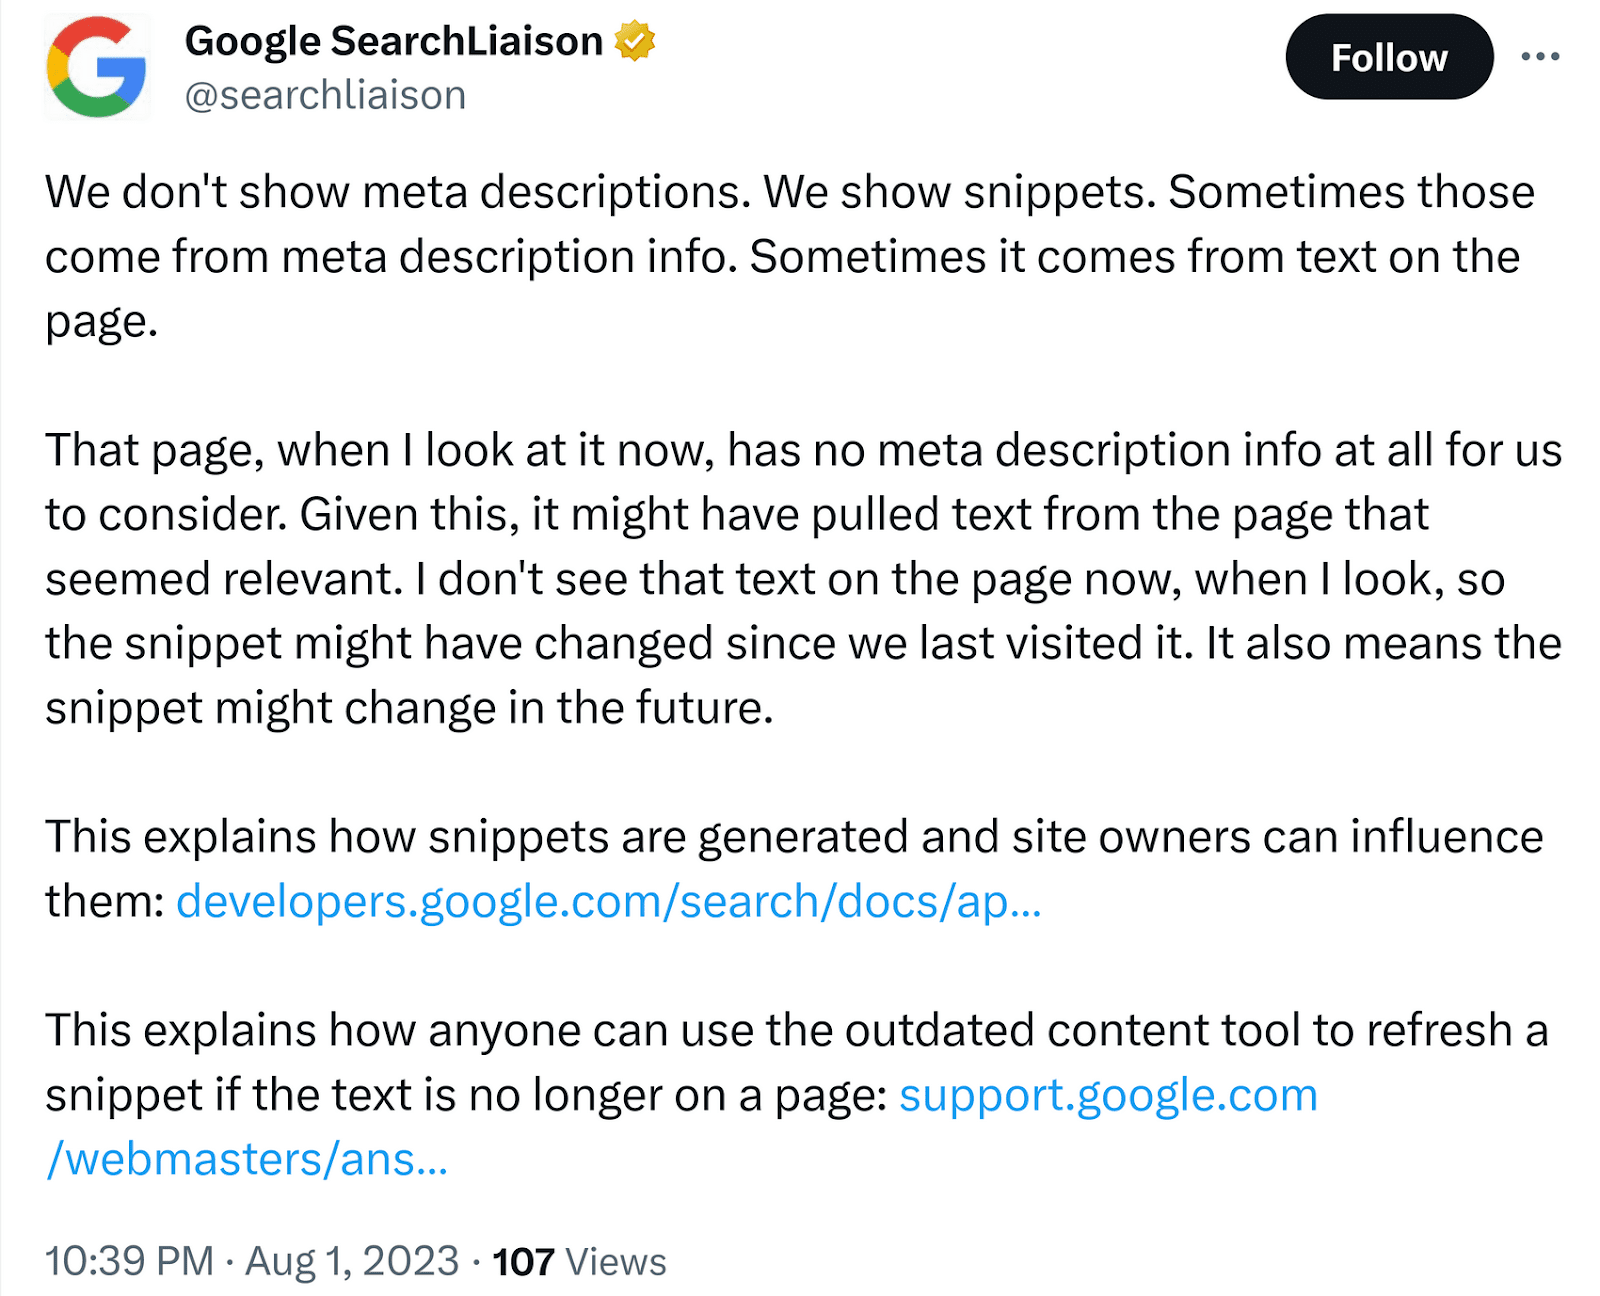 Google SearchLiason's post on X explaining how Google uses meta descriptions